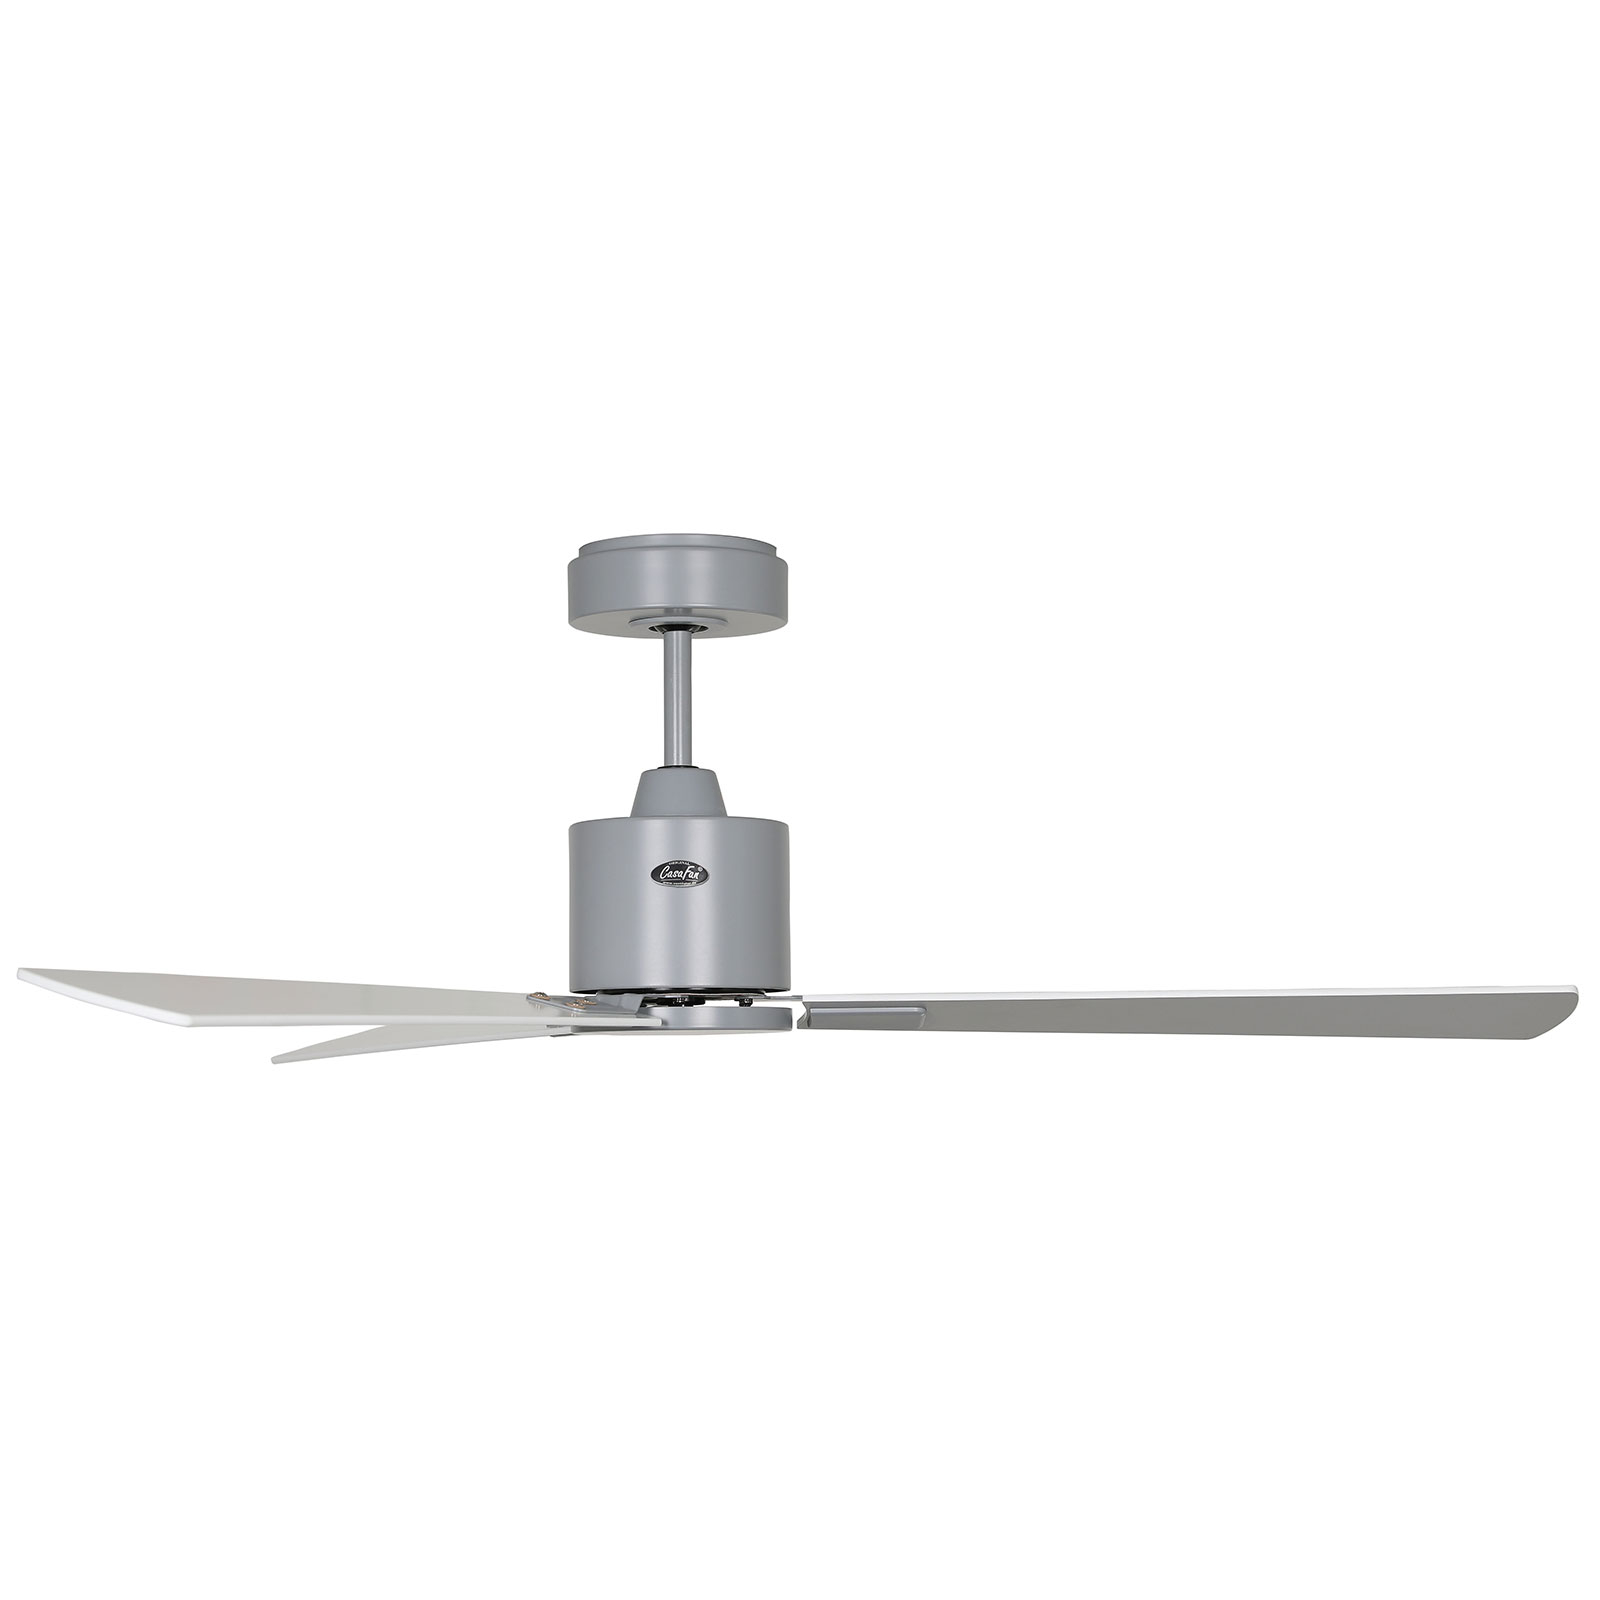 Eco Concept ceiling fan 152 cm grey/white-grey